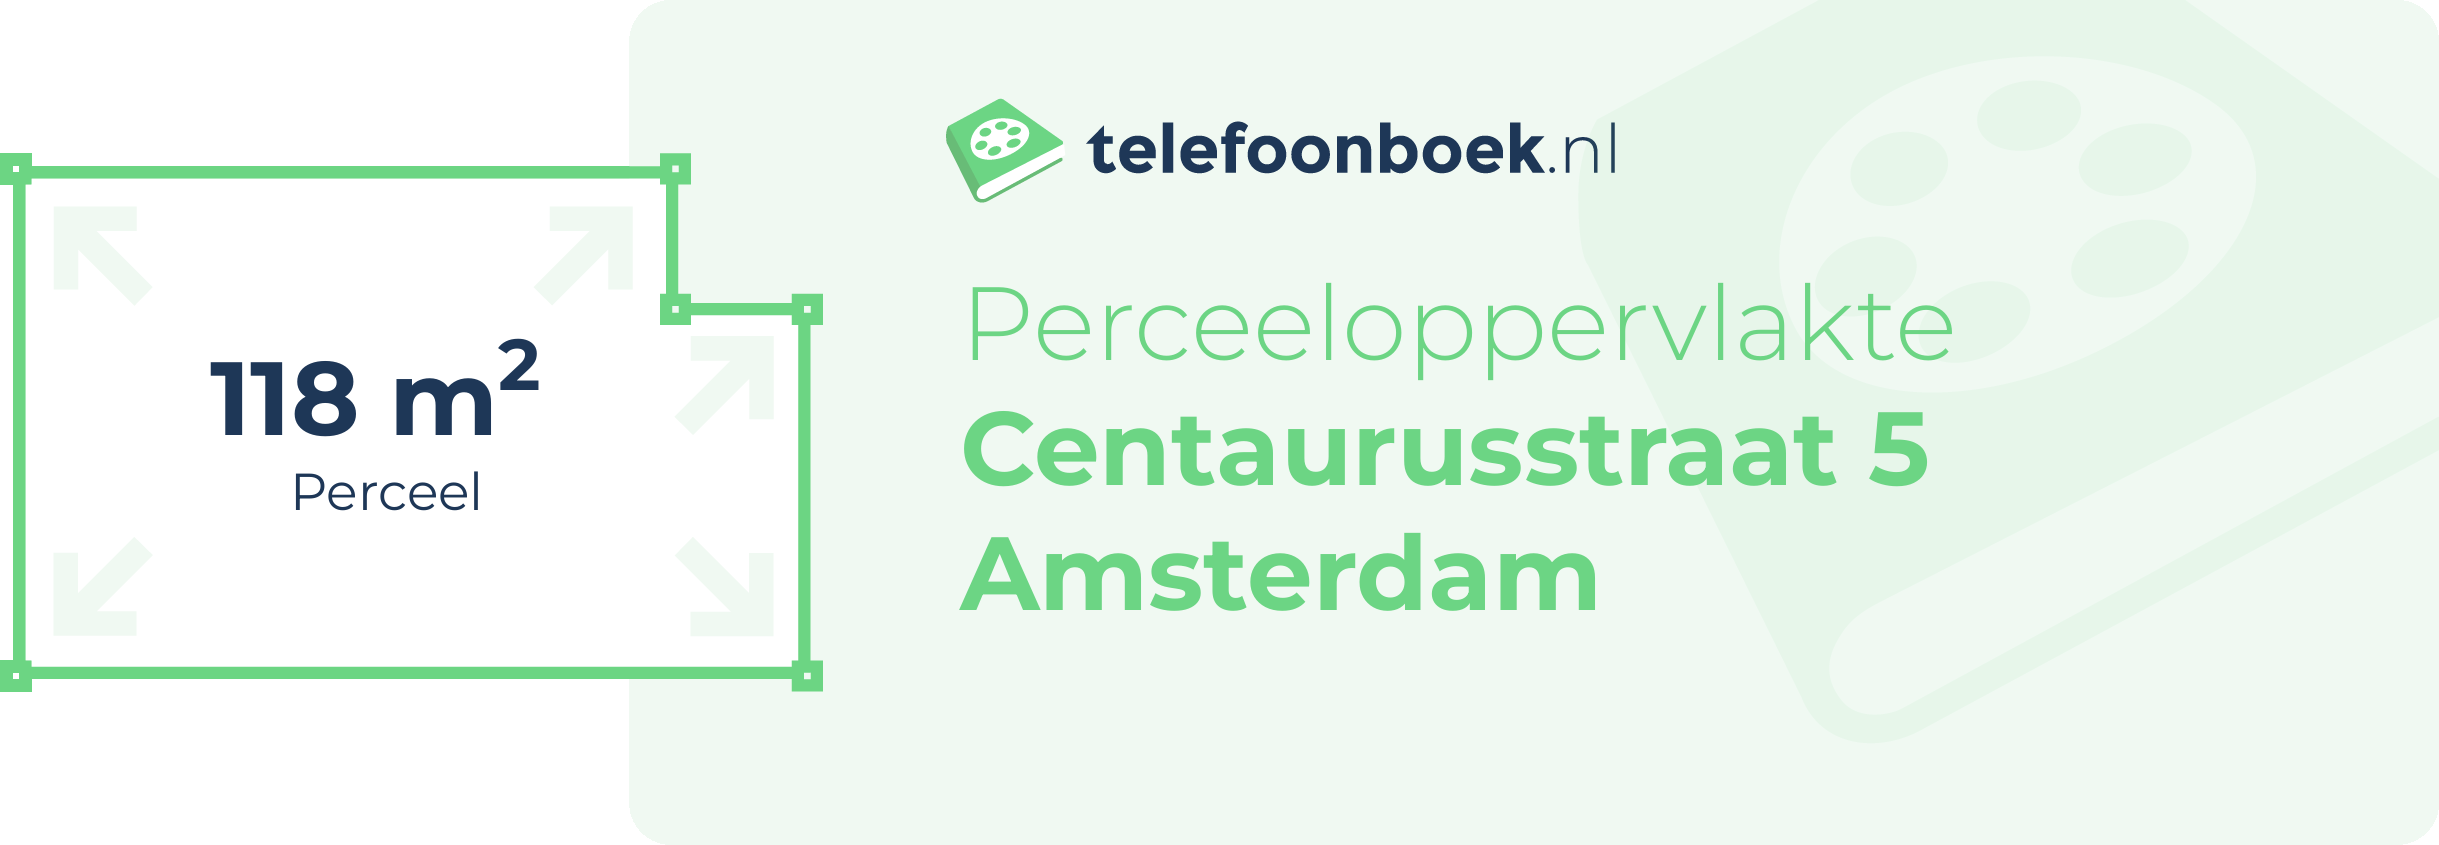 Perceeloppervlakte Centaurusstraat 5 Amsterdam